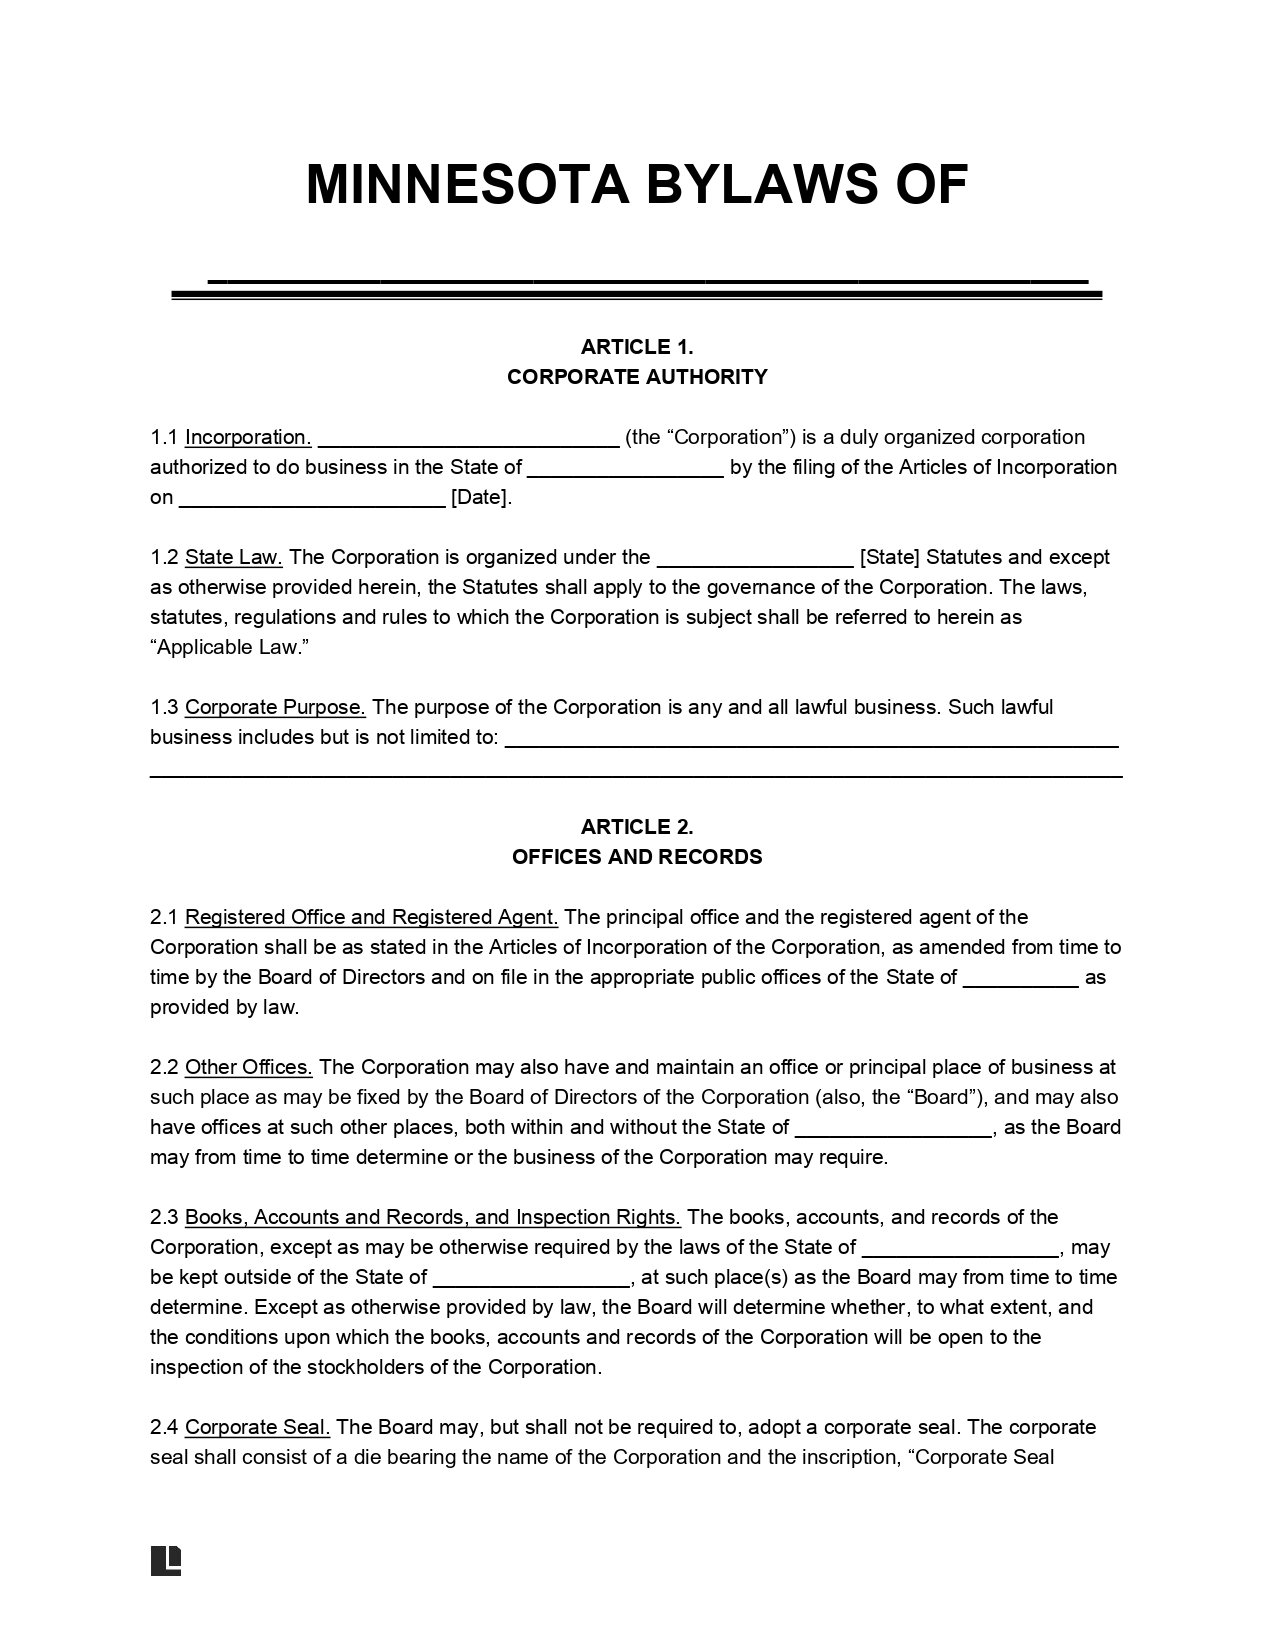 Minnesota Corporate Bylaws Template